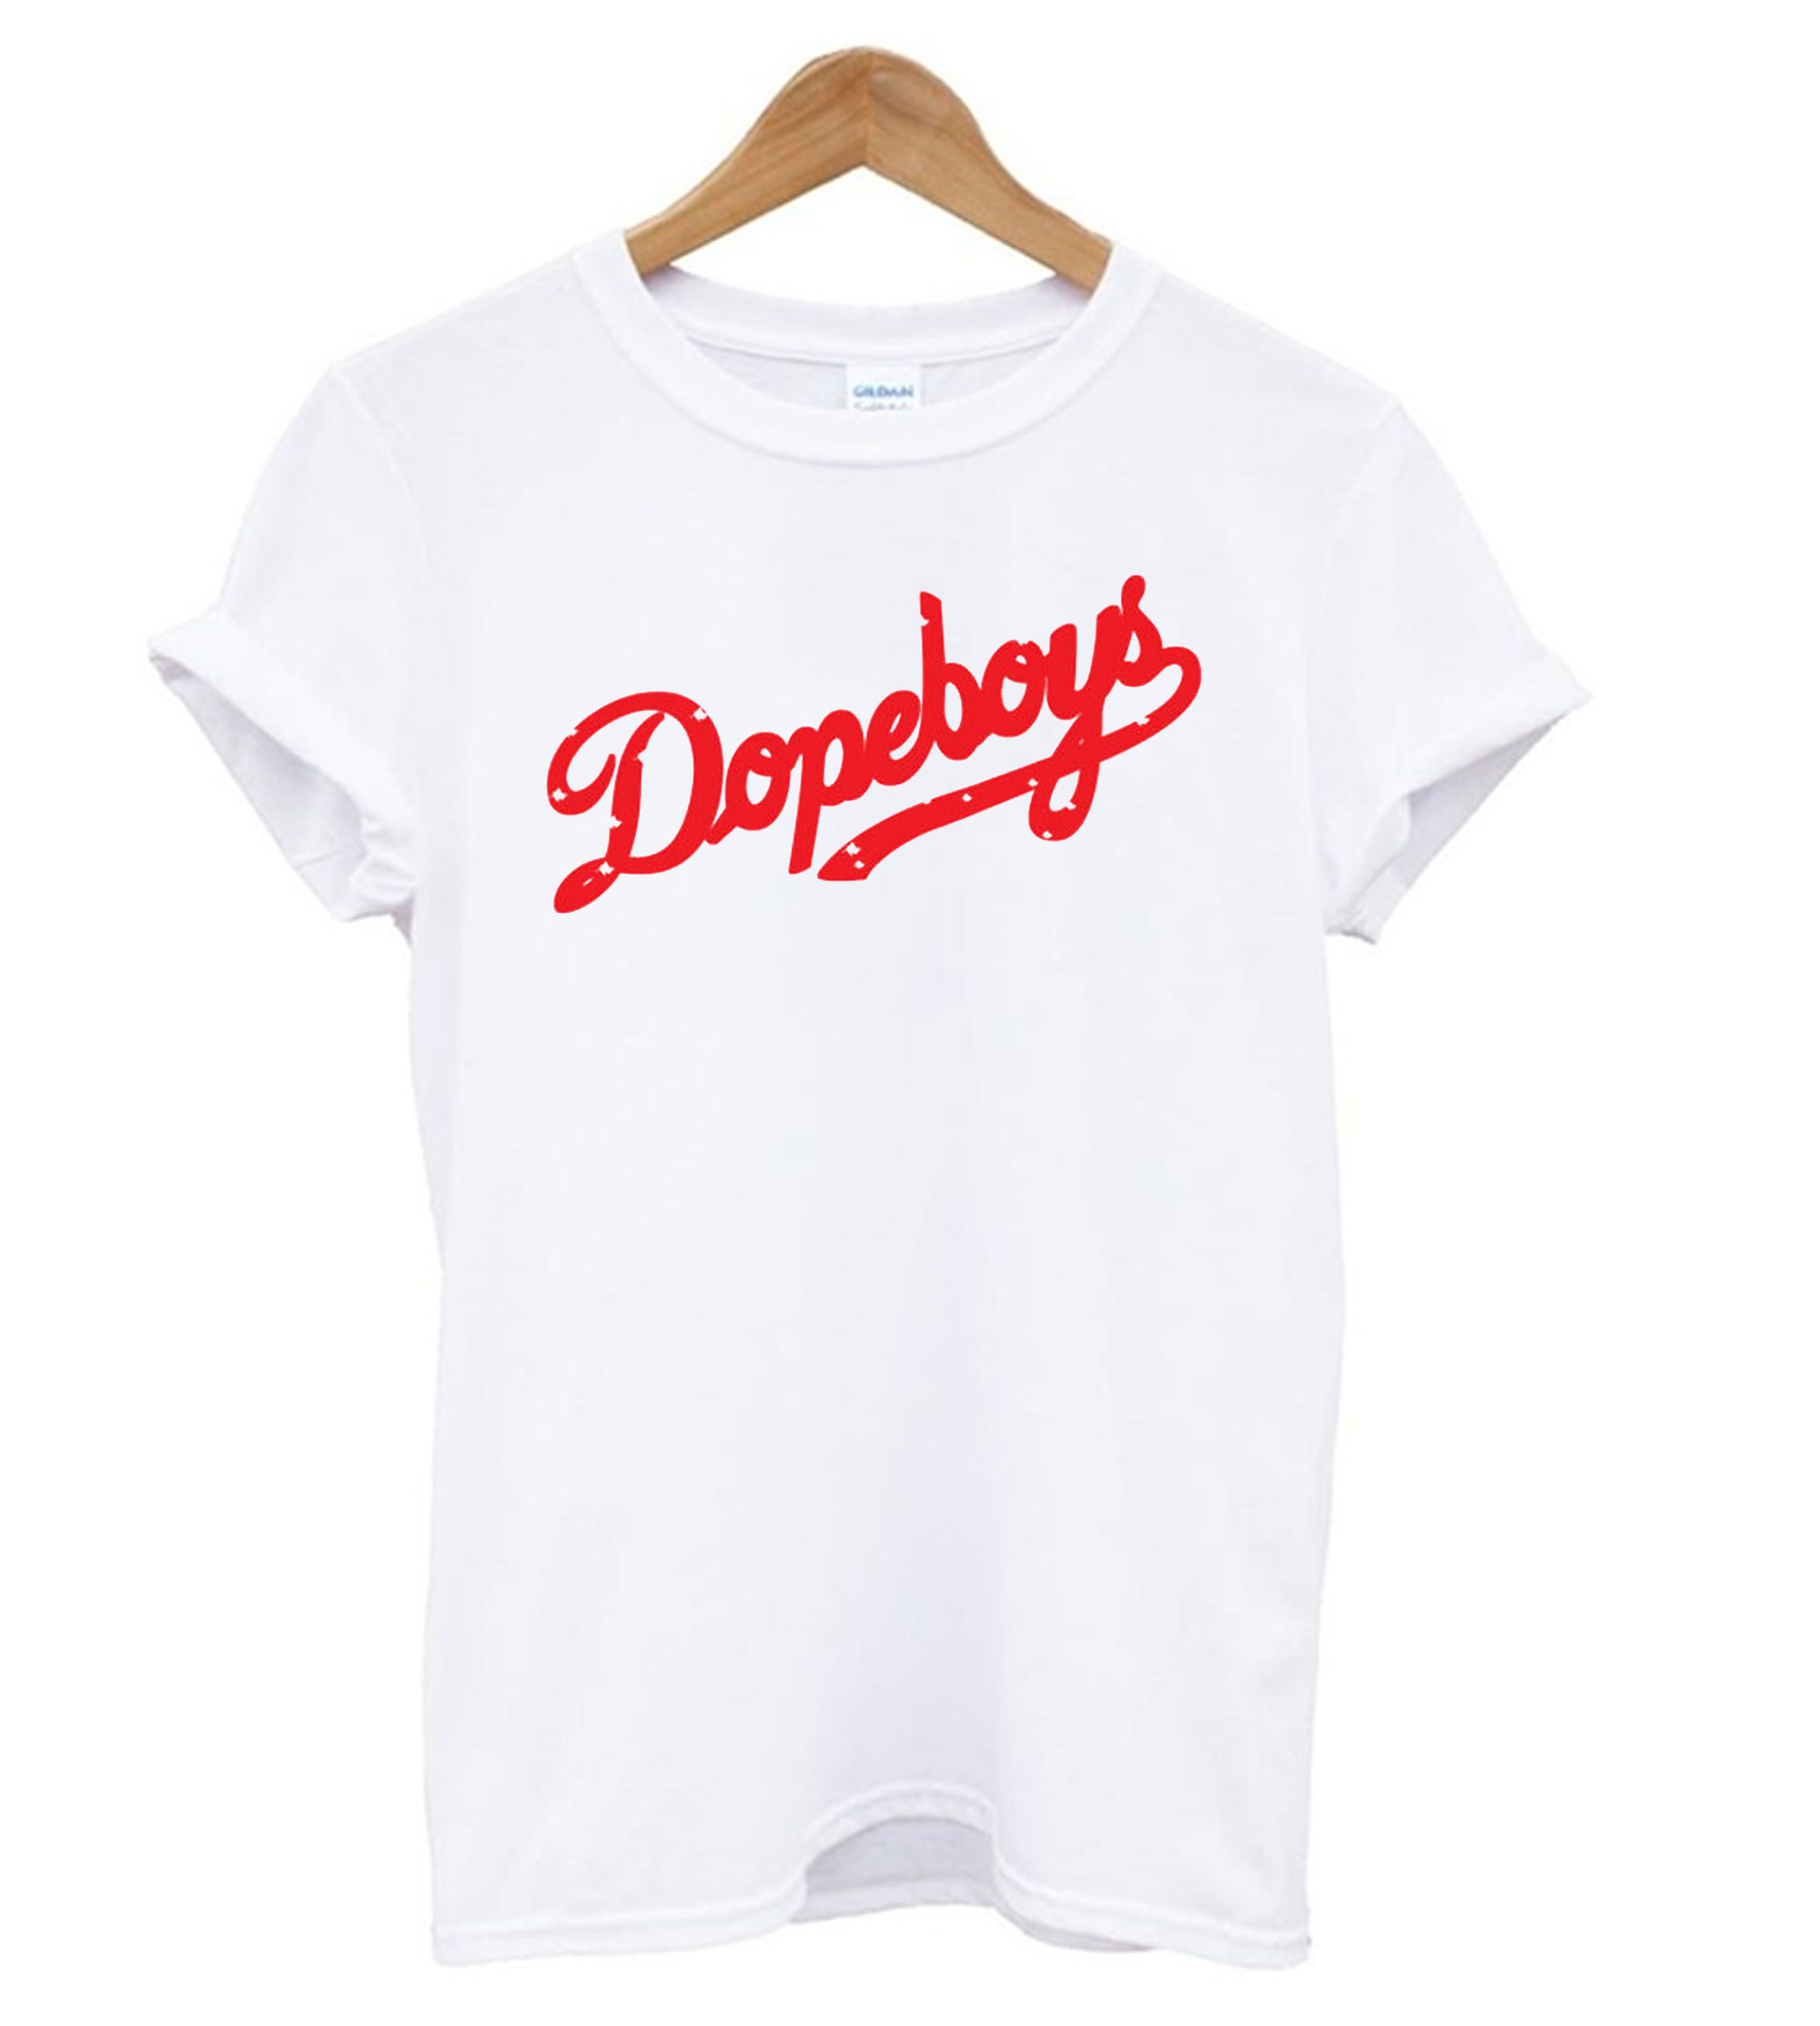 Dopeboys - LA Dodgers Parody City Of Angels Nipsey Hussle N.W.A T shirt